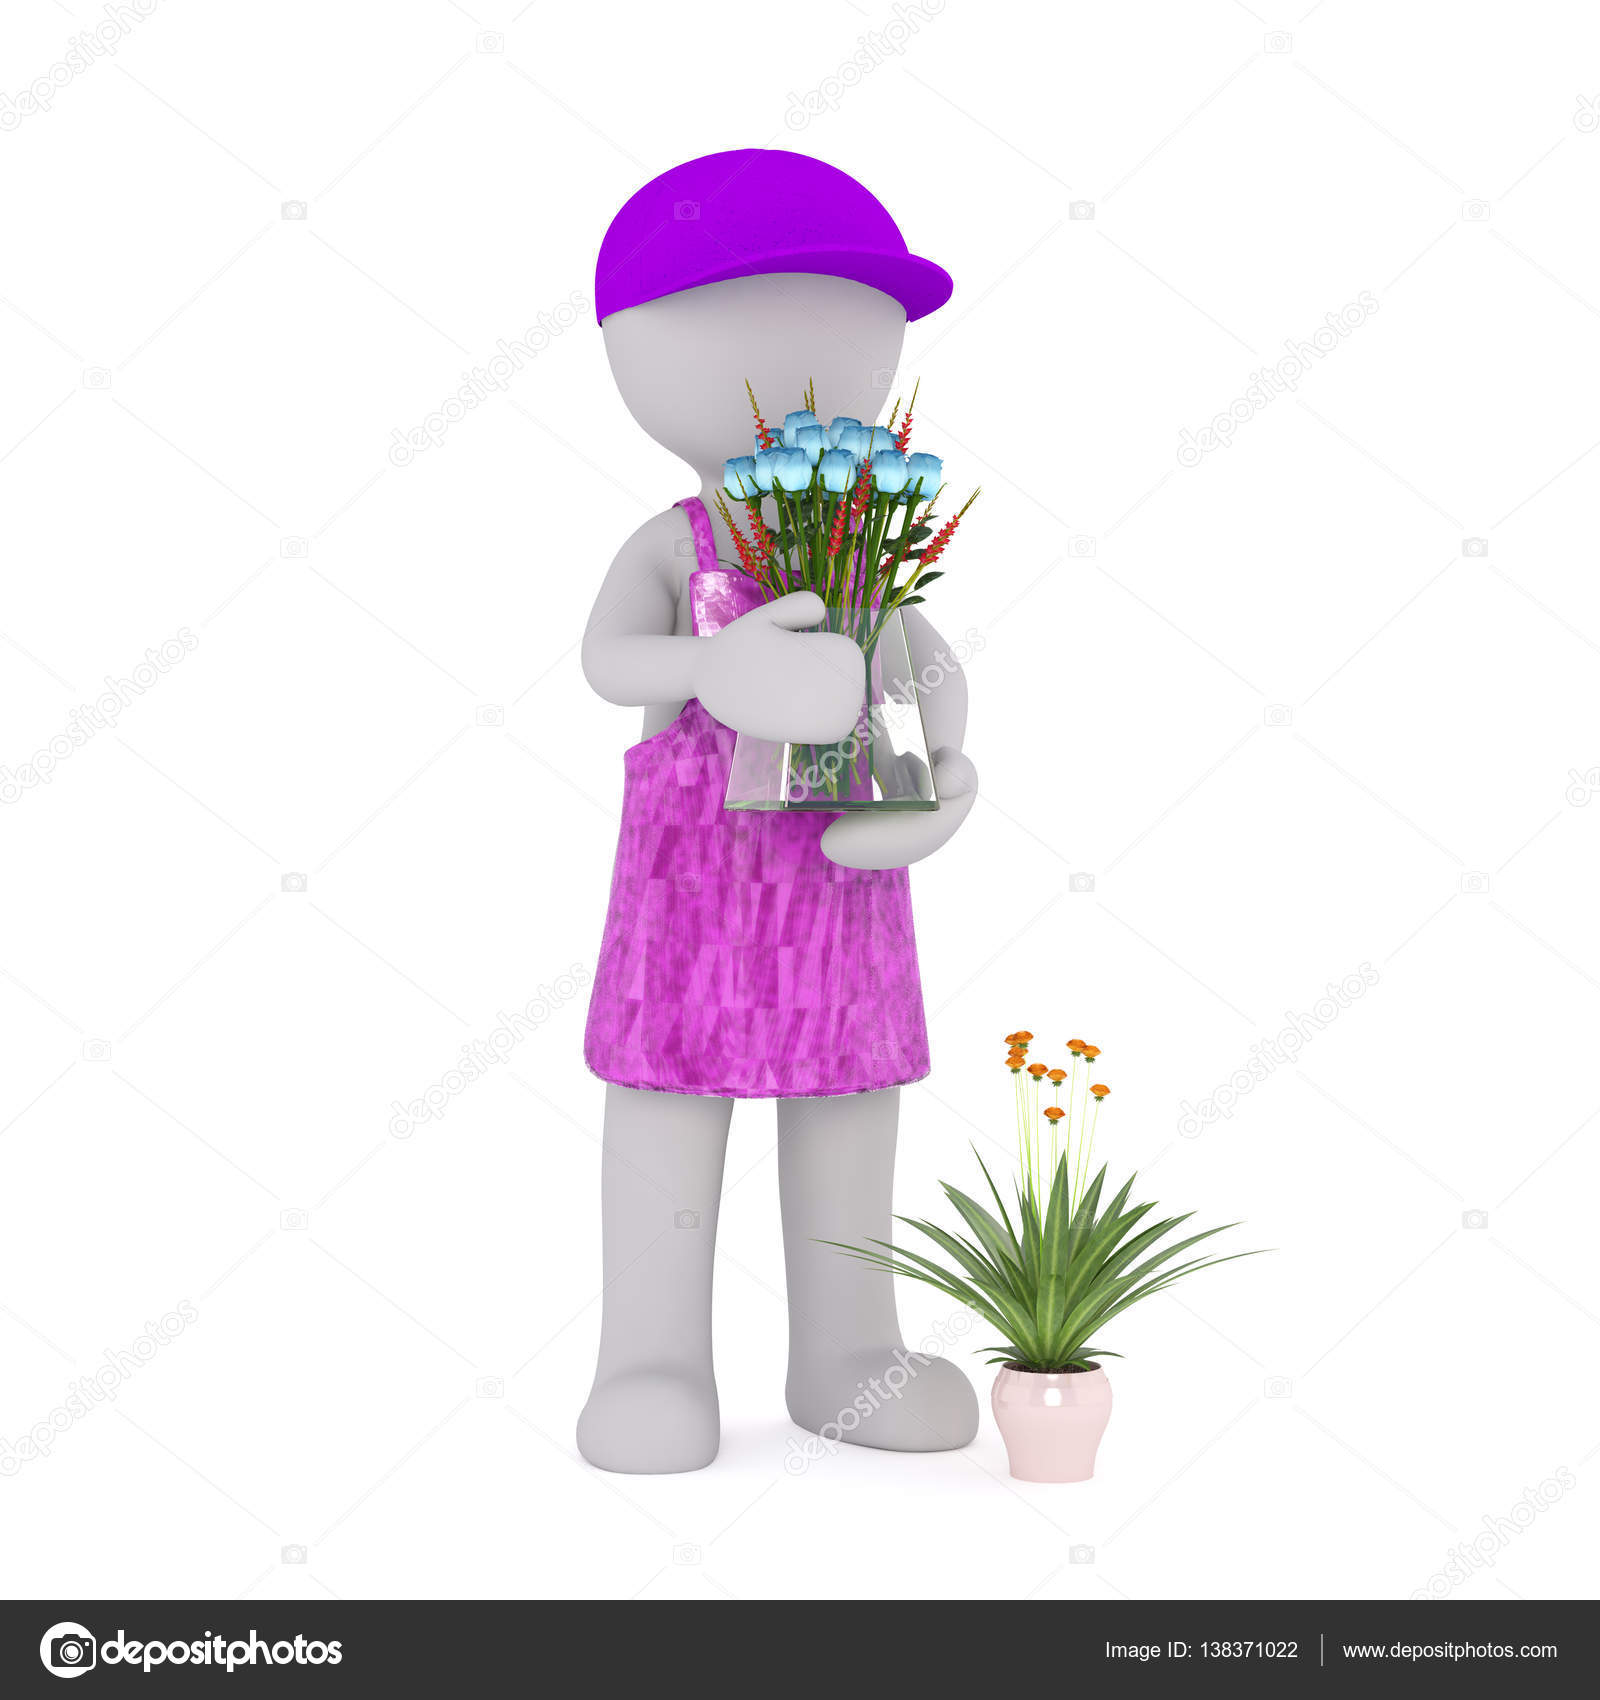 depositphotos 138371022 stock photo cartoon florist holding glass vase